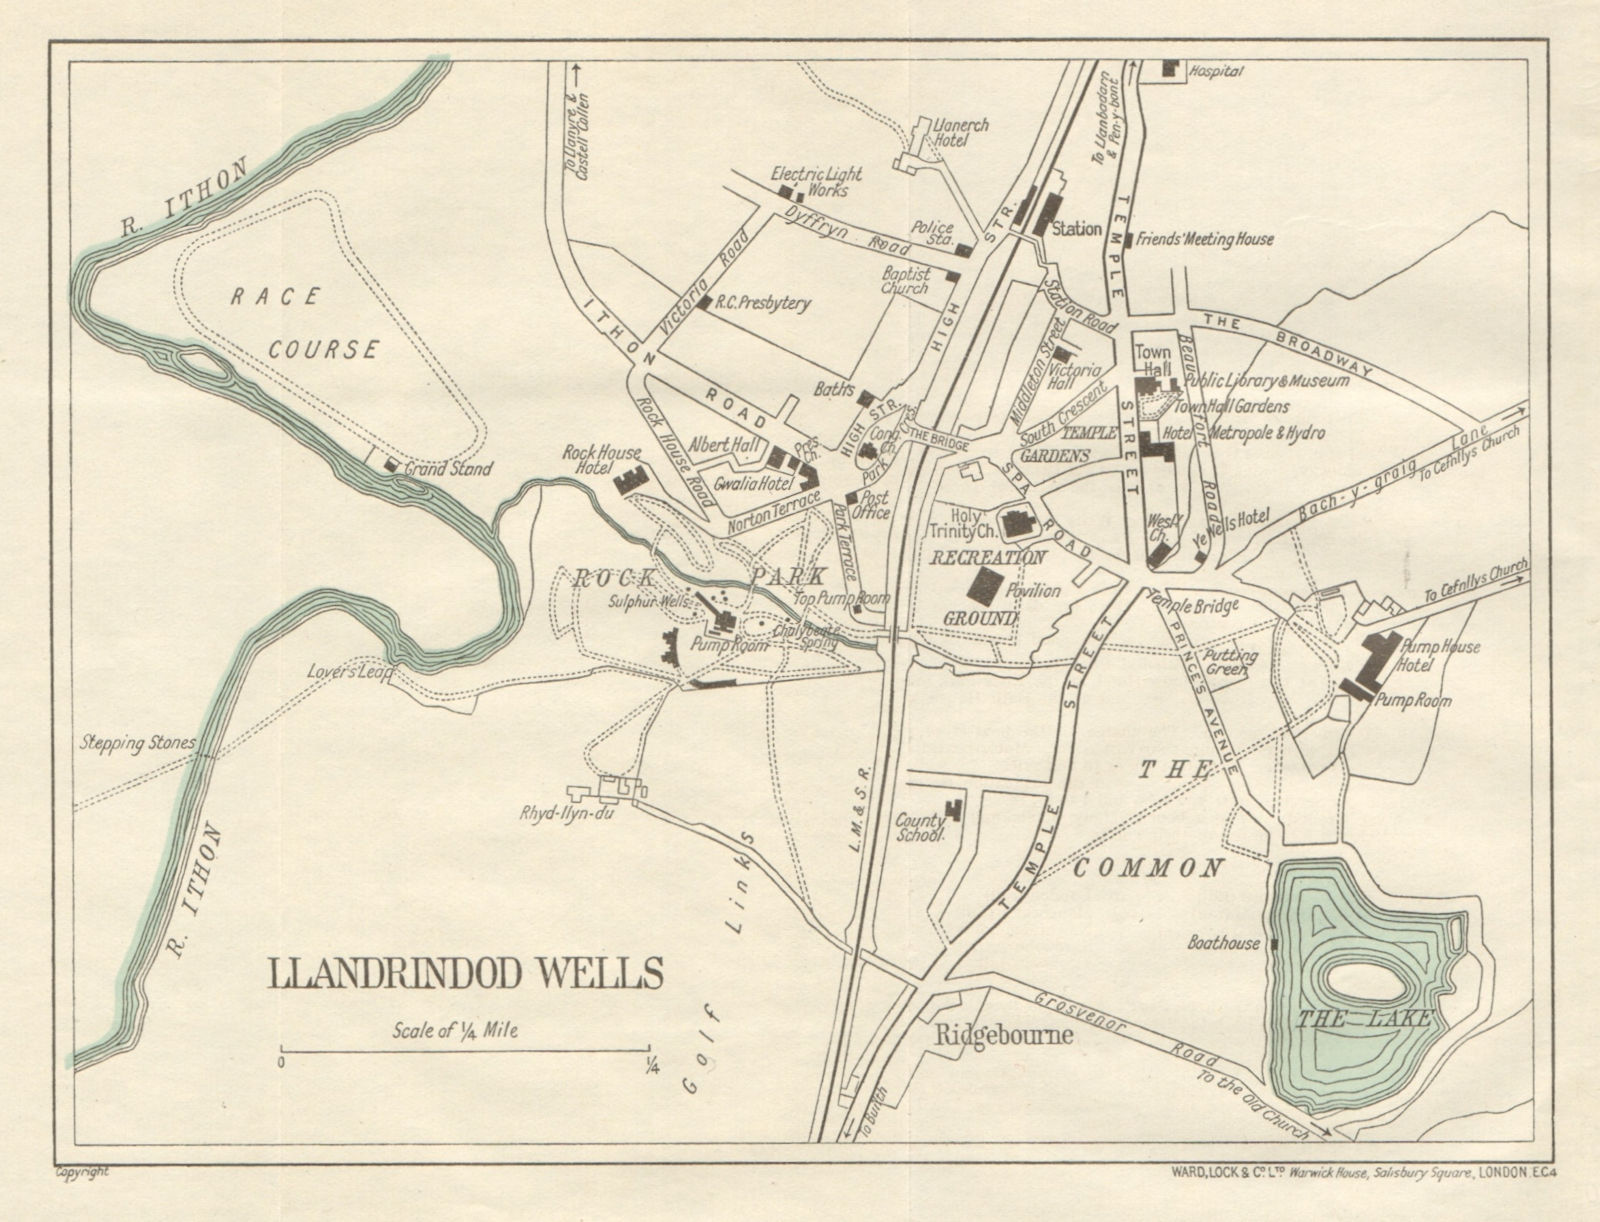 Associate Product LLANDRINDOD WELLS vintage tourist town city plan. Wales. WARD LOCK 1939 map